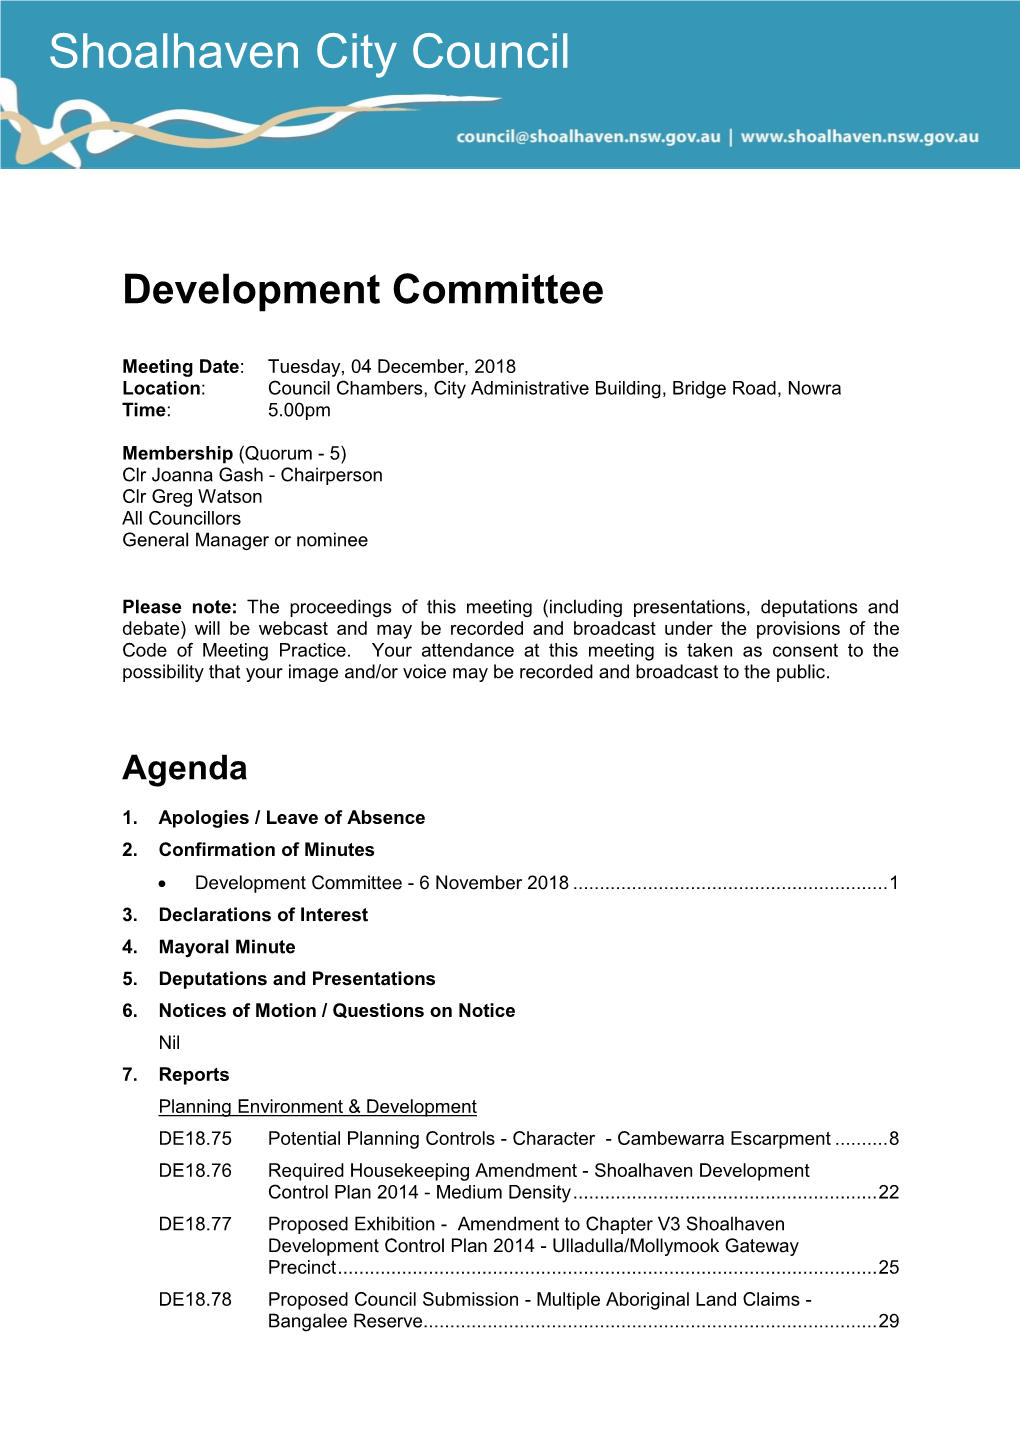 Agenda of Development Committee